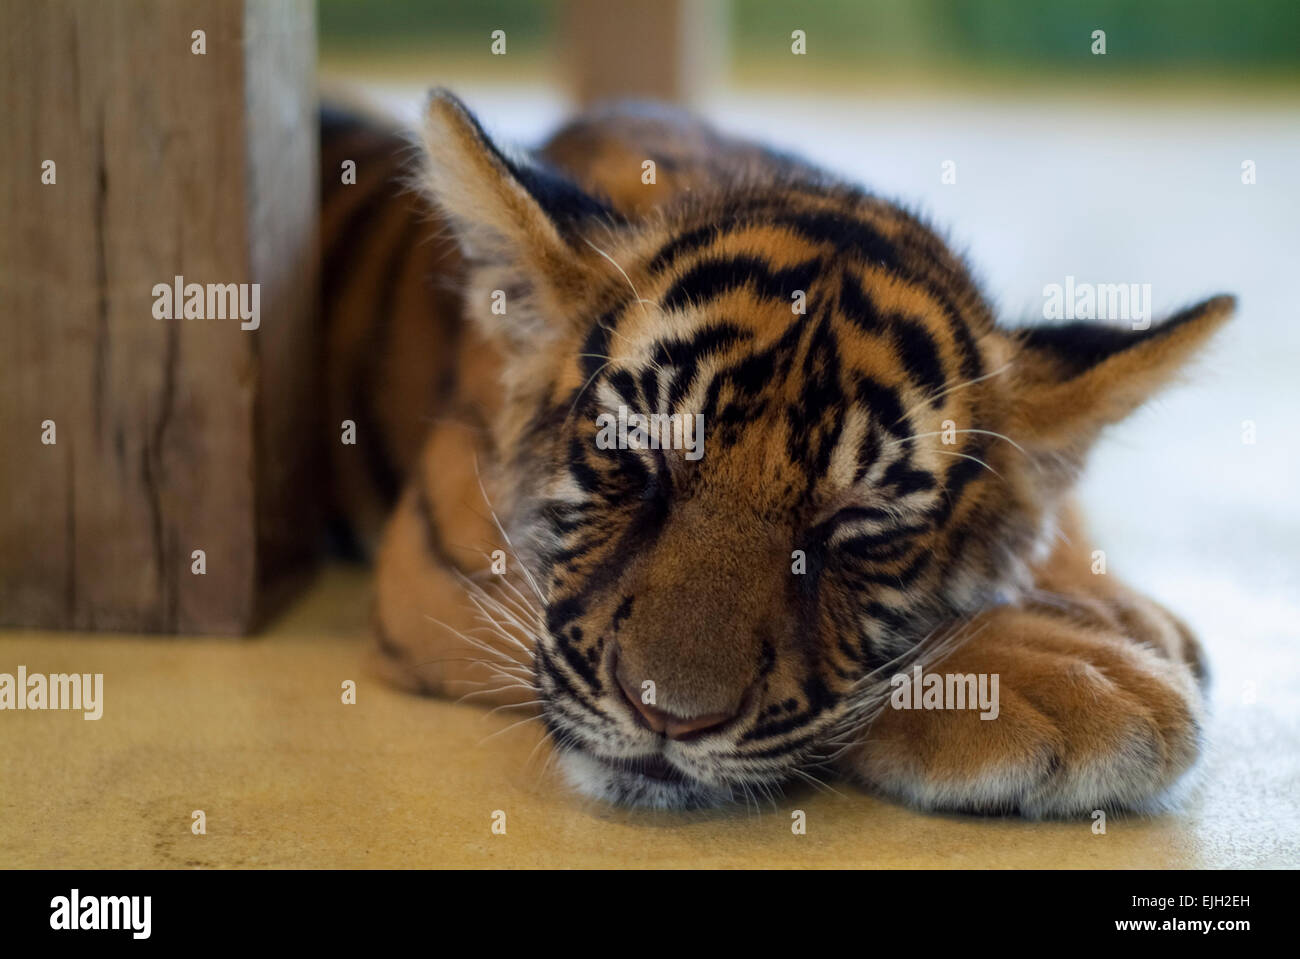 Captive Tiger cub sleeping Stock Photo